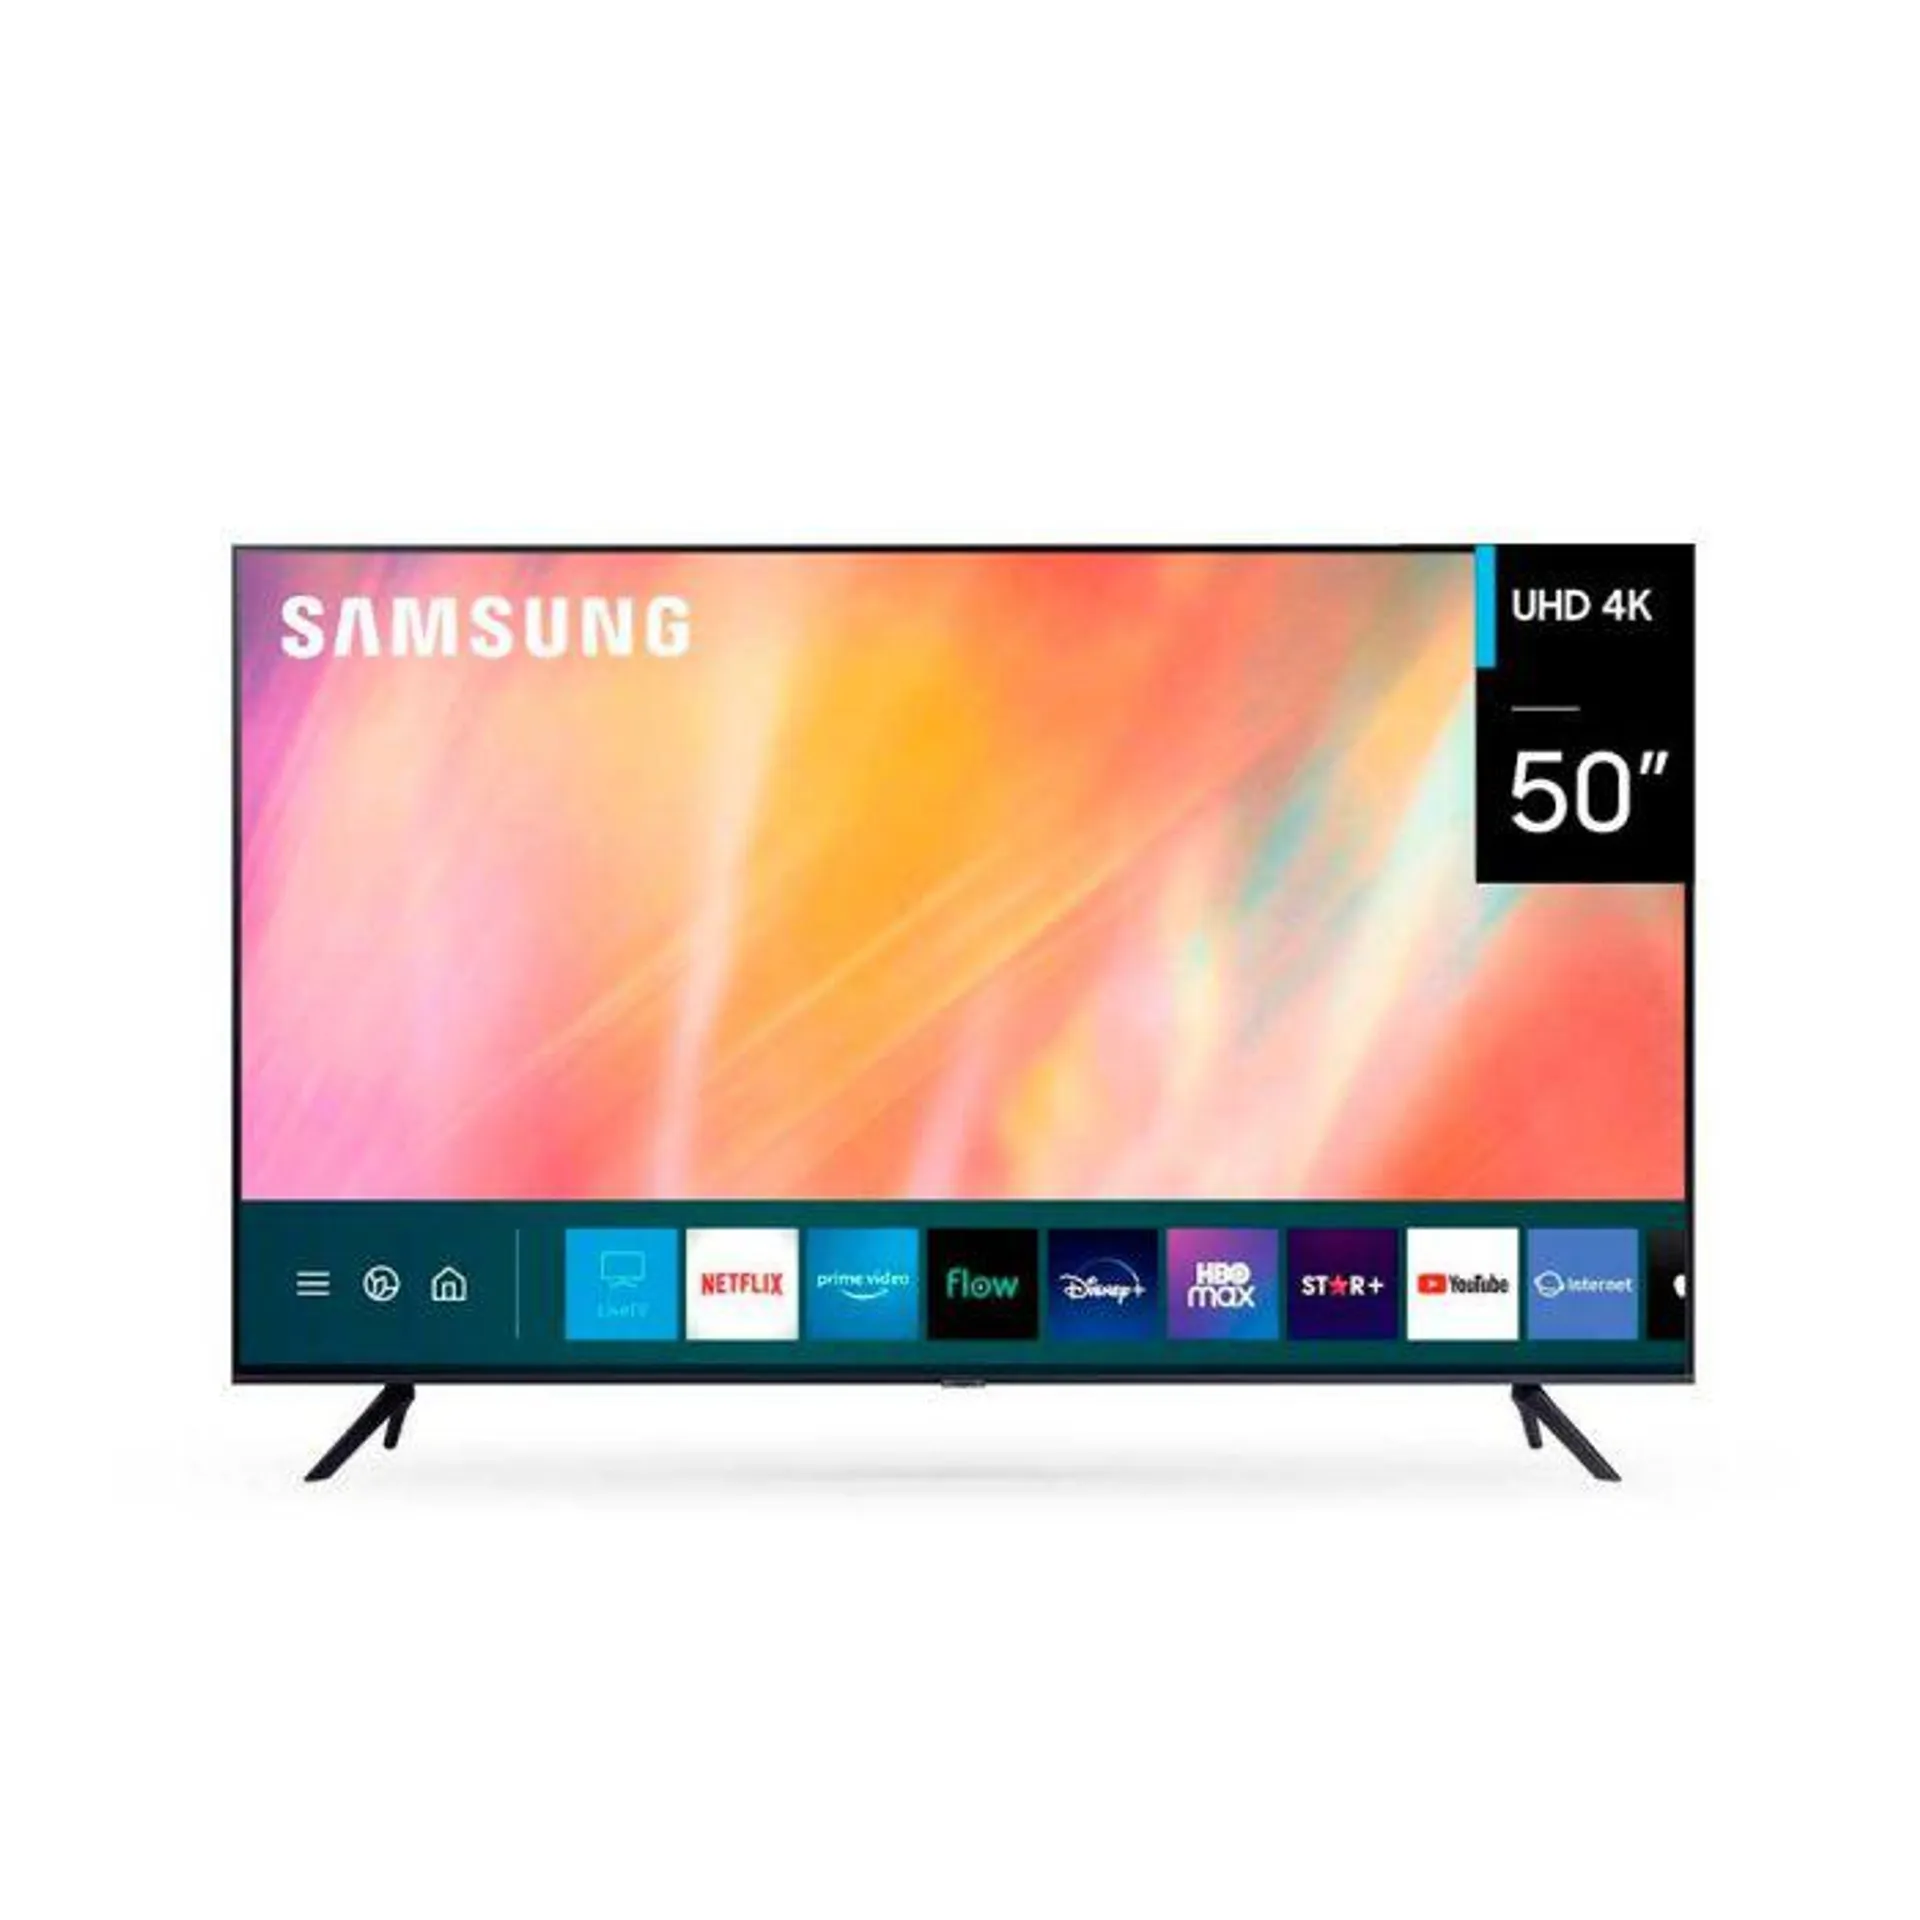 Samsung SAMART TV 50' UHD